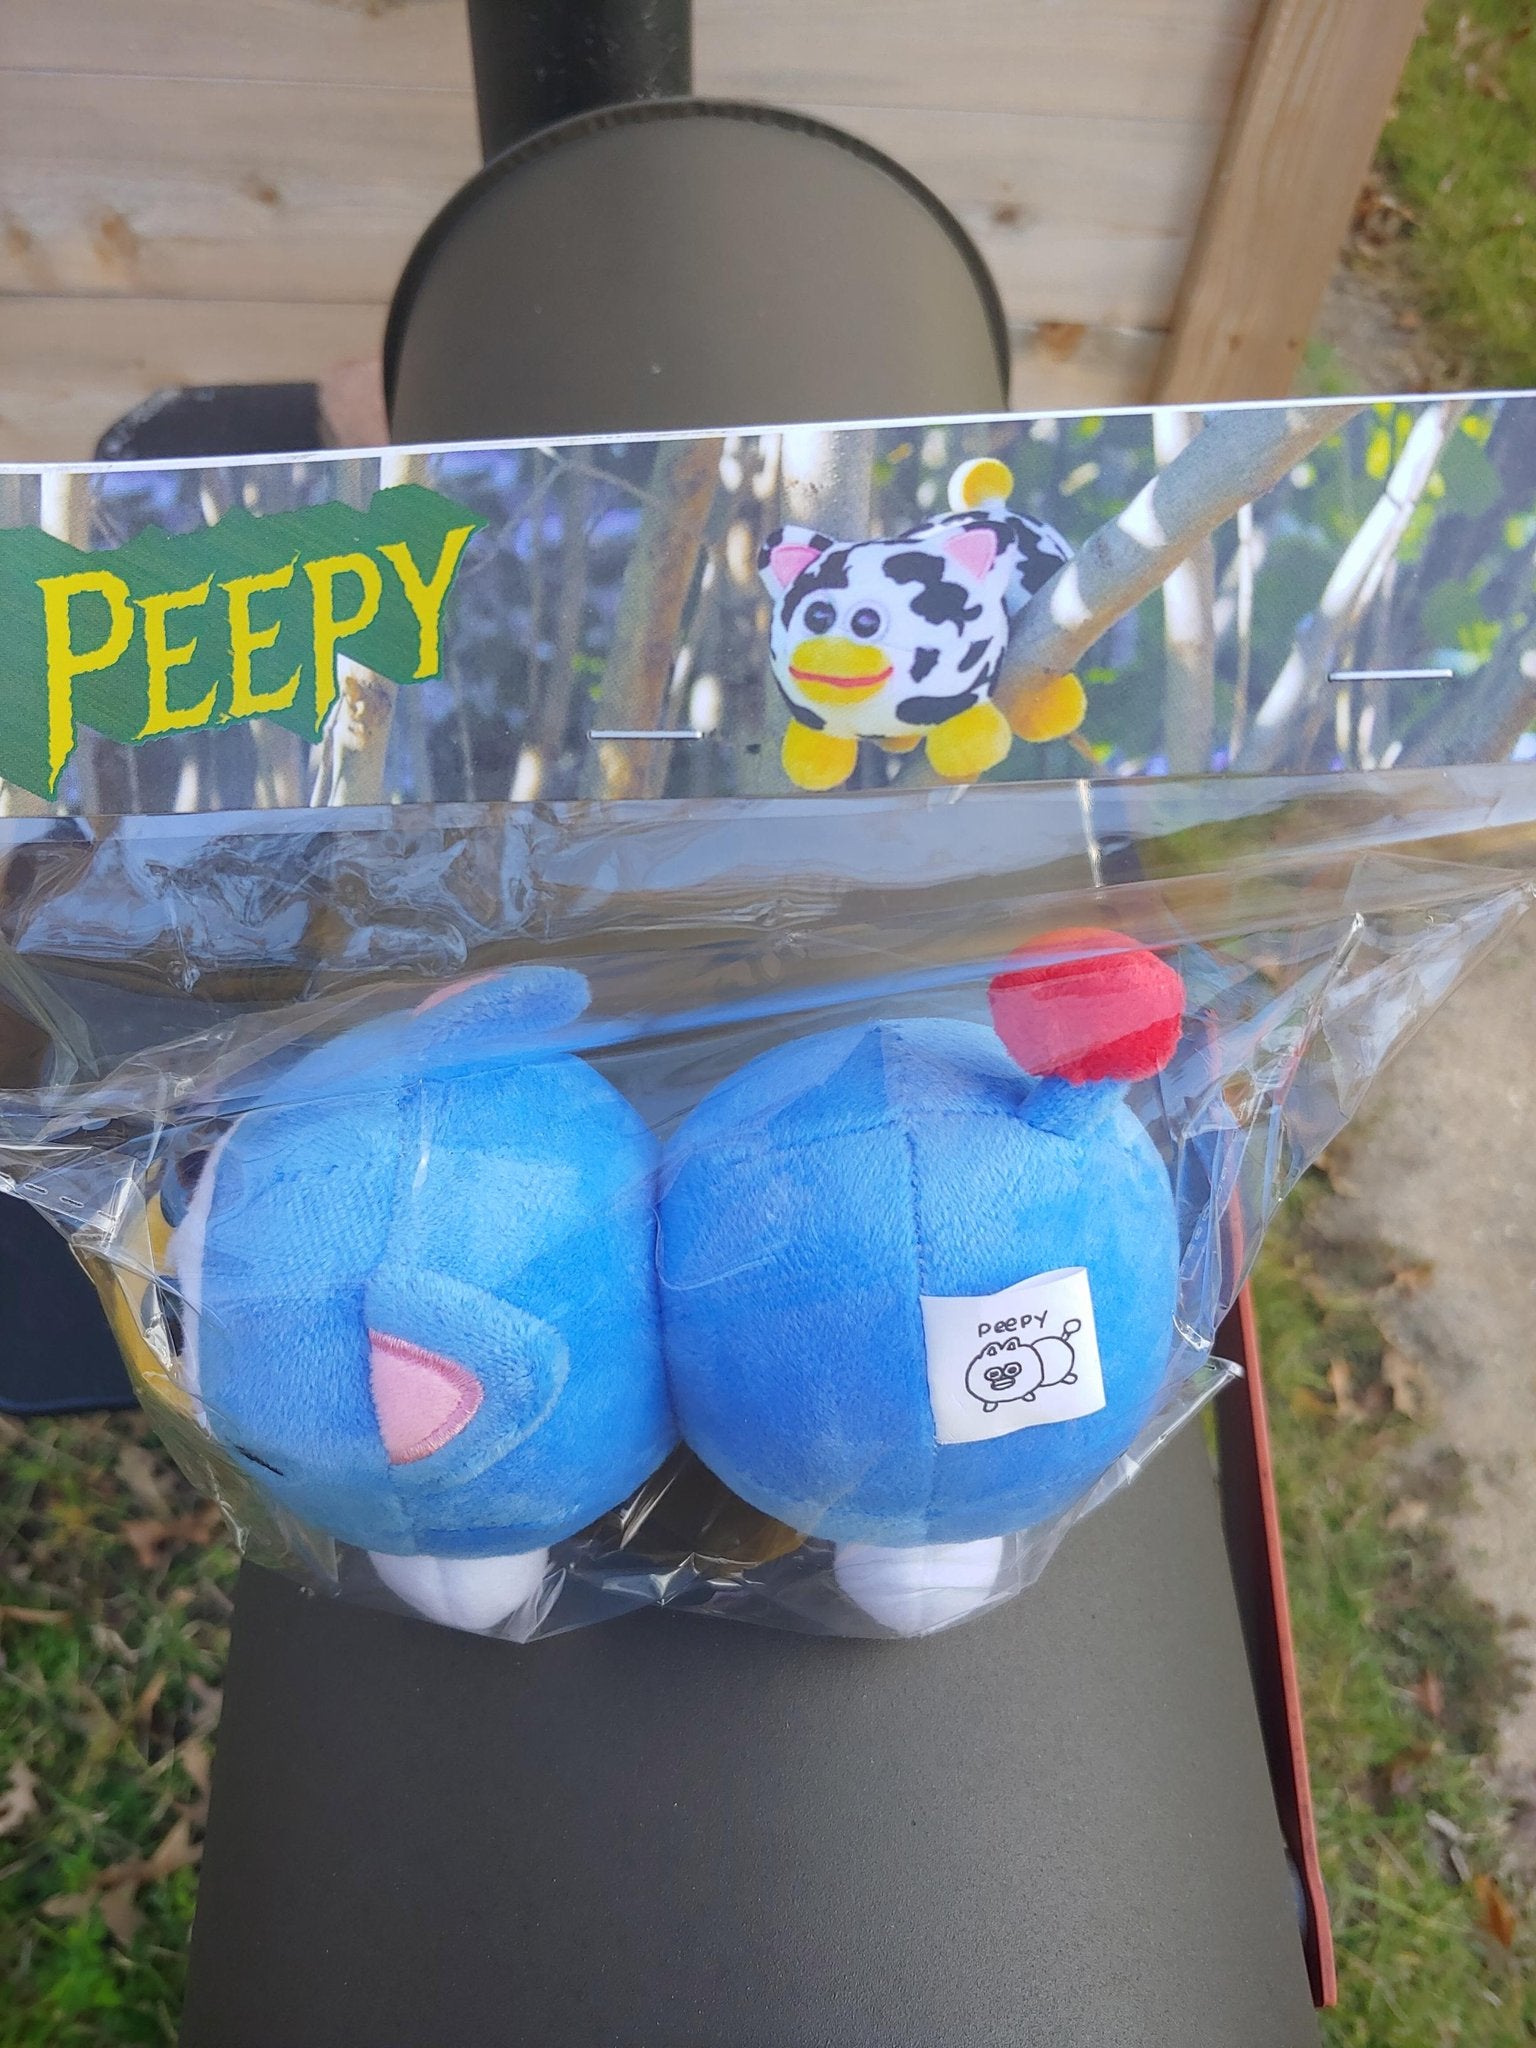 Peepy (Celebrity Blue)